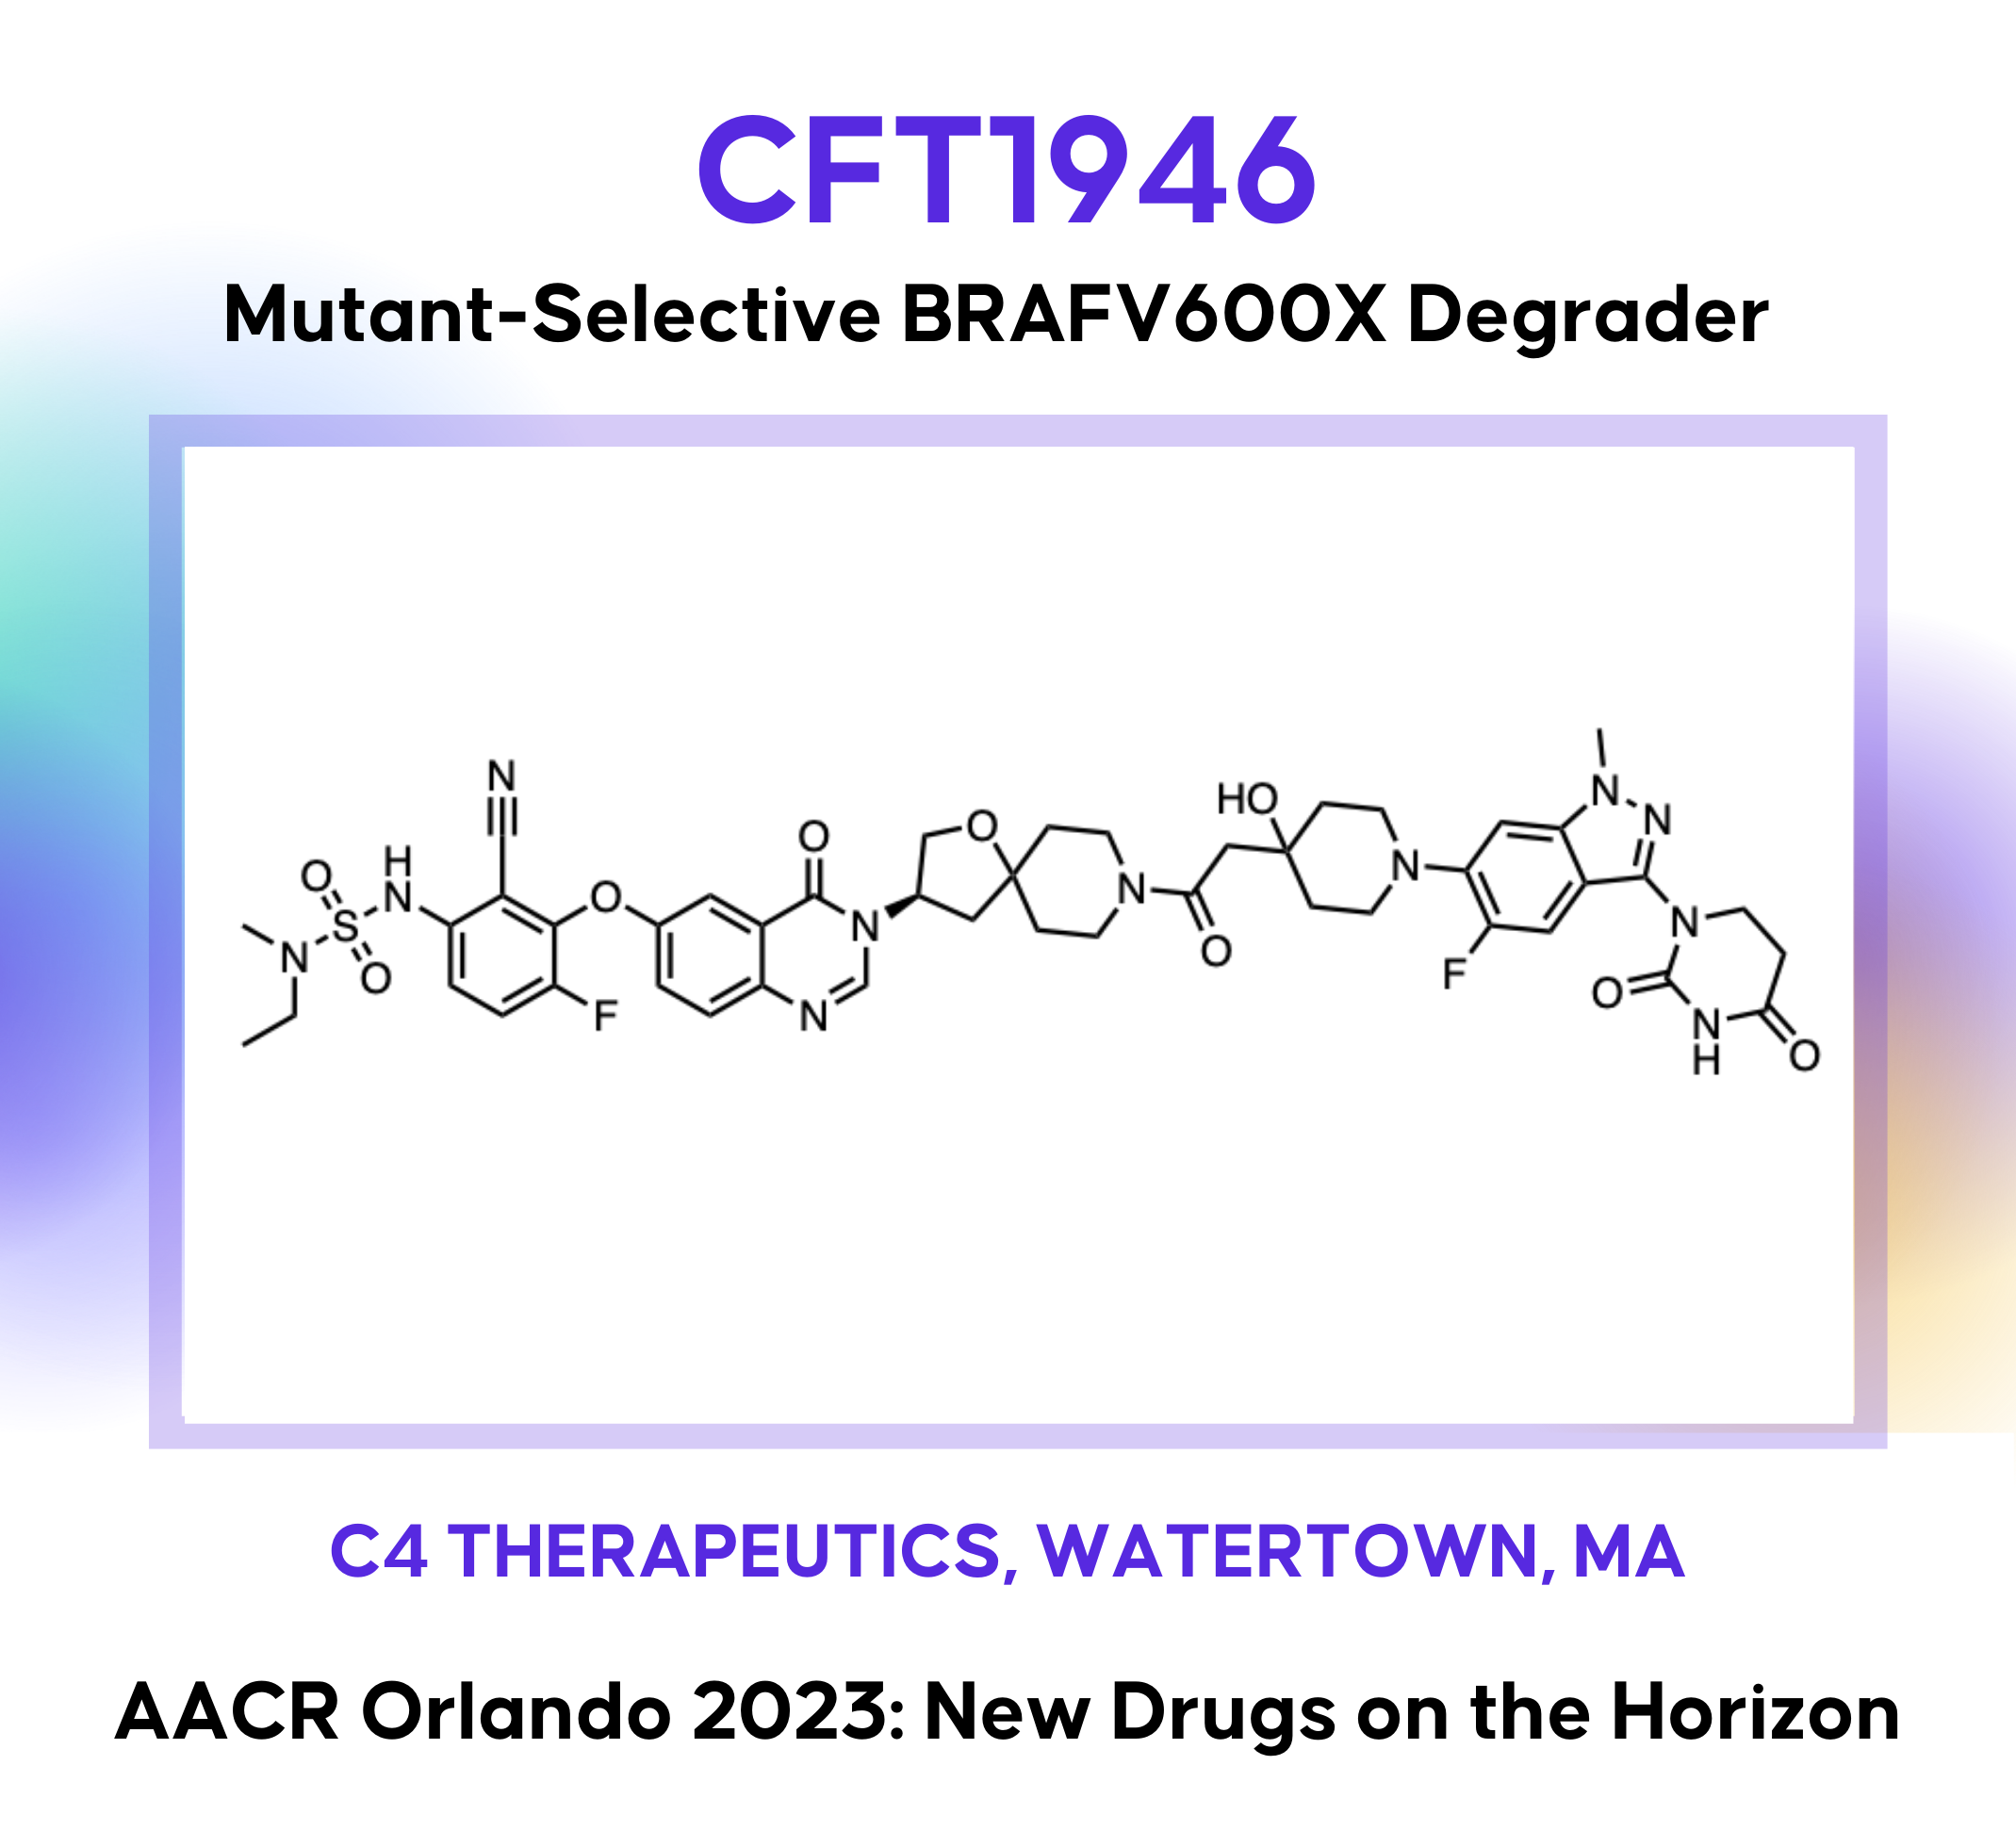 CRBN-Based Oral Mutant-Selective BRAFV600X Degrader, CFT1946 Chemical Structure